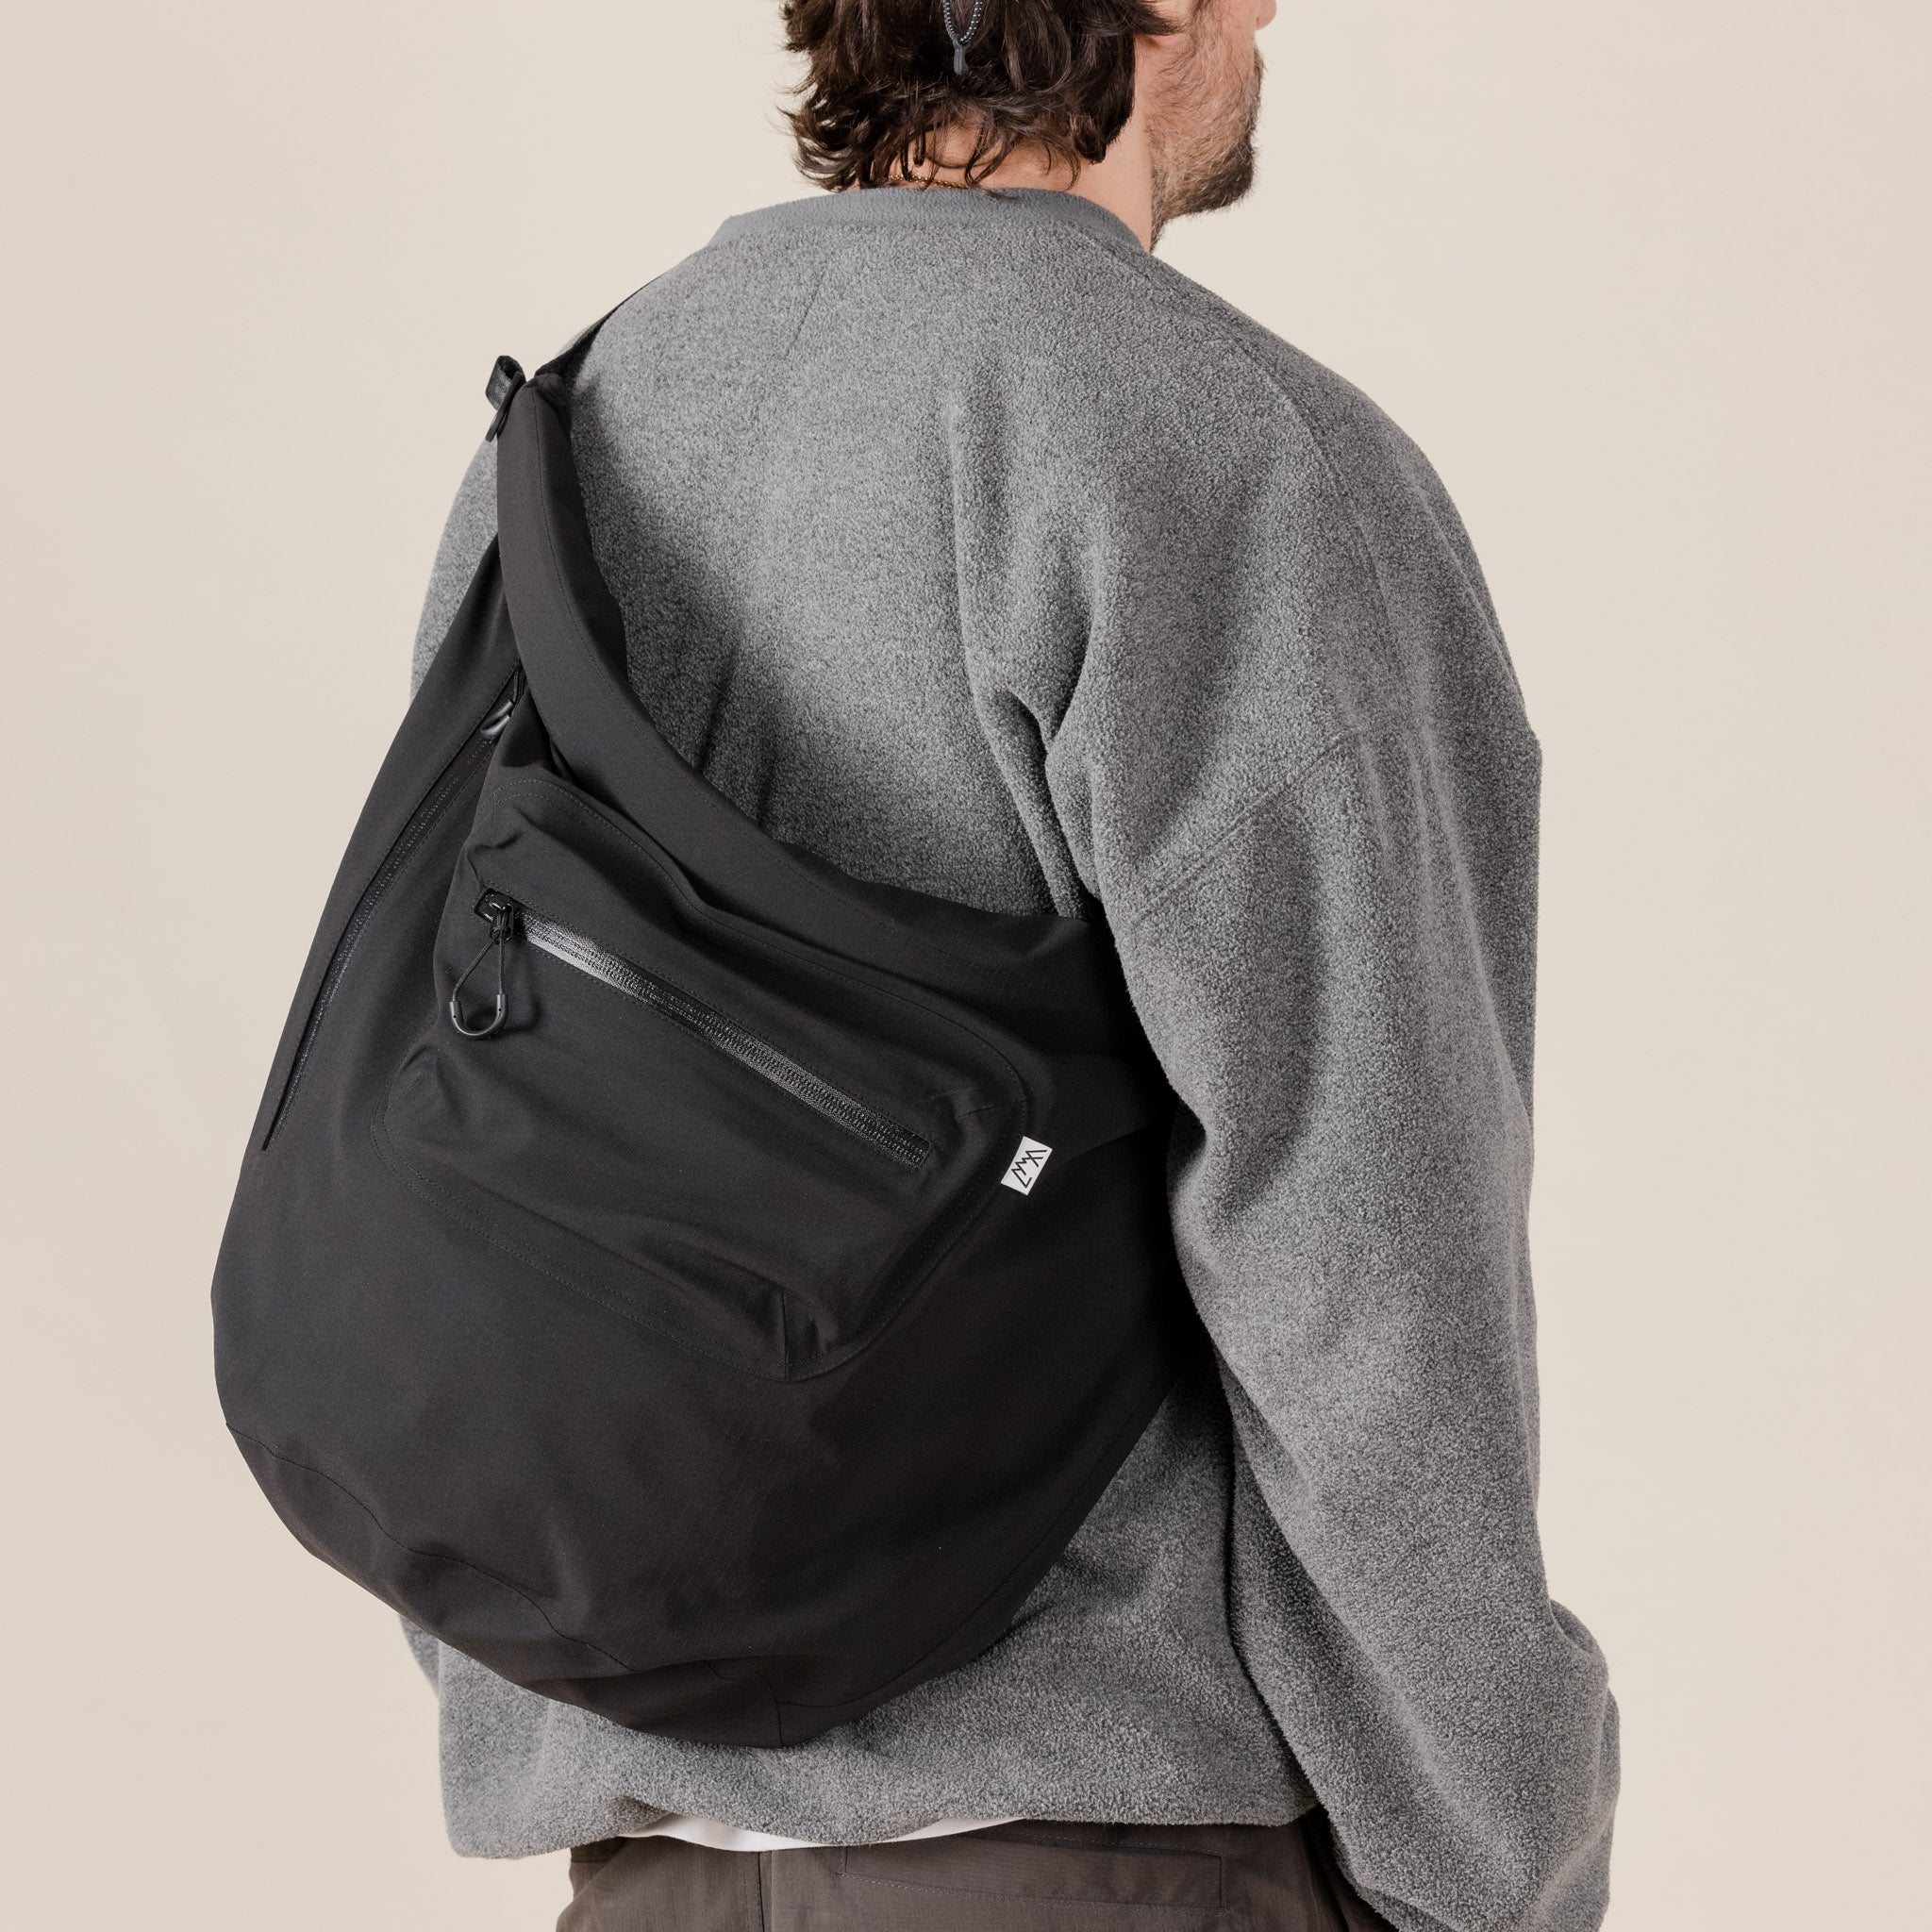 CMF Comfy Outdoor Garment - TTOO Exclusive - CMF Waterproof Roll Top Bag - Black